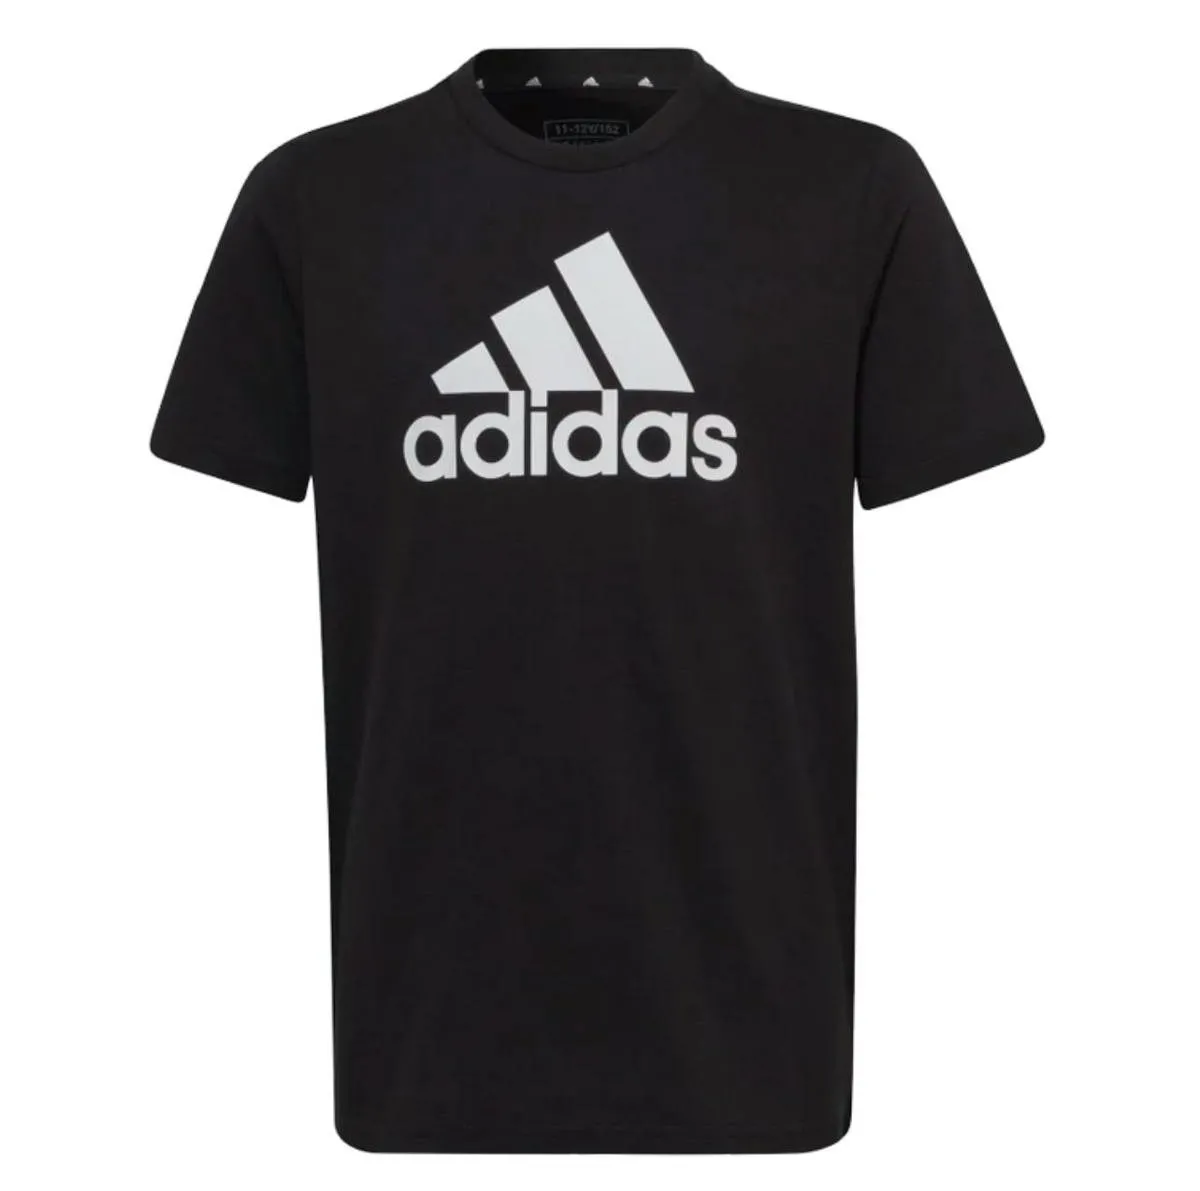 adidas T-Shirt Kinder U BL Tee, schwarz / weiß